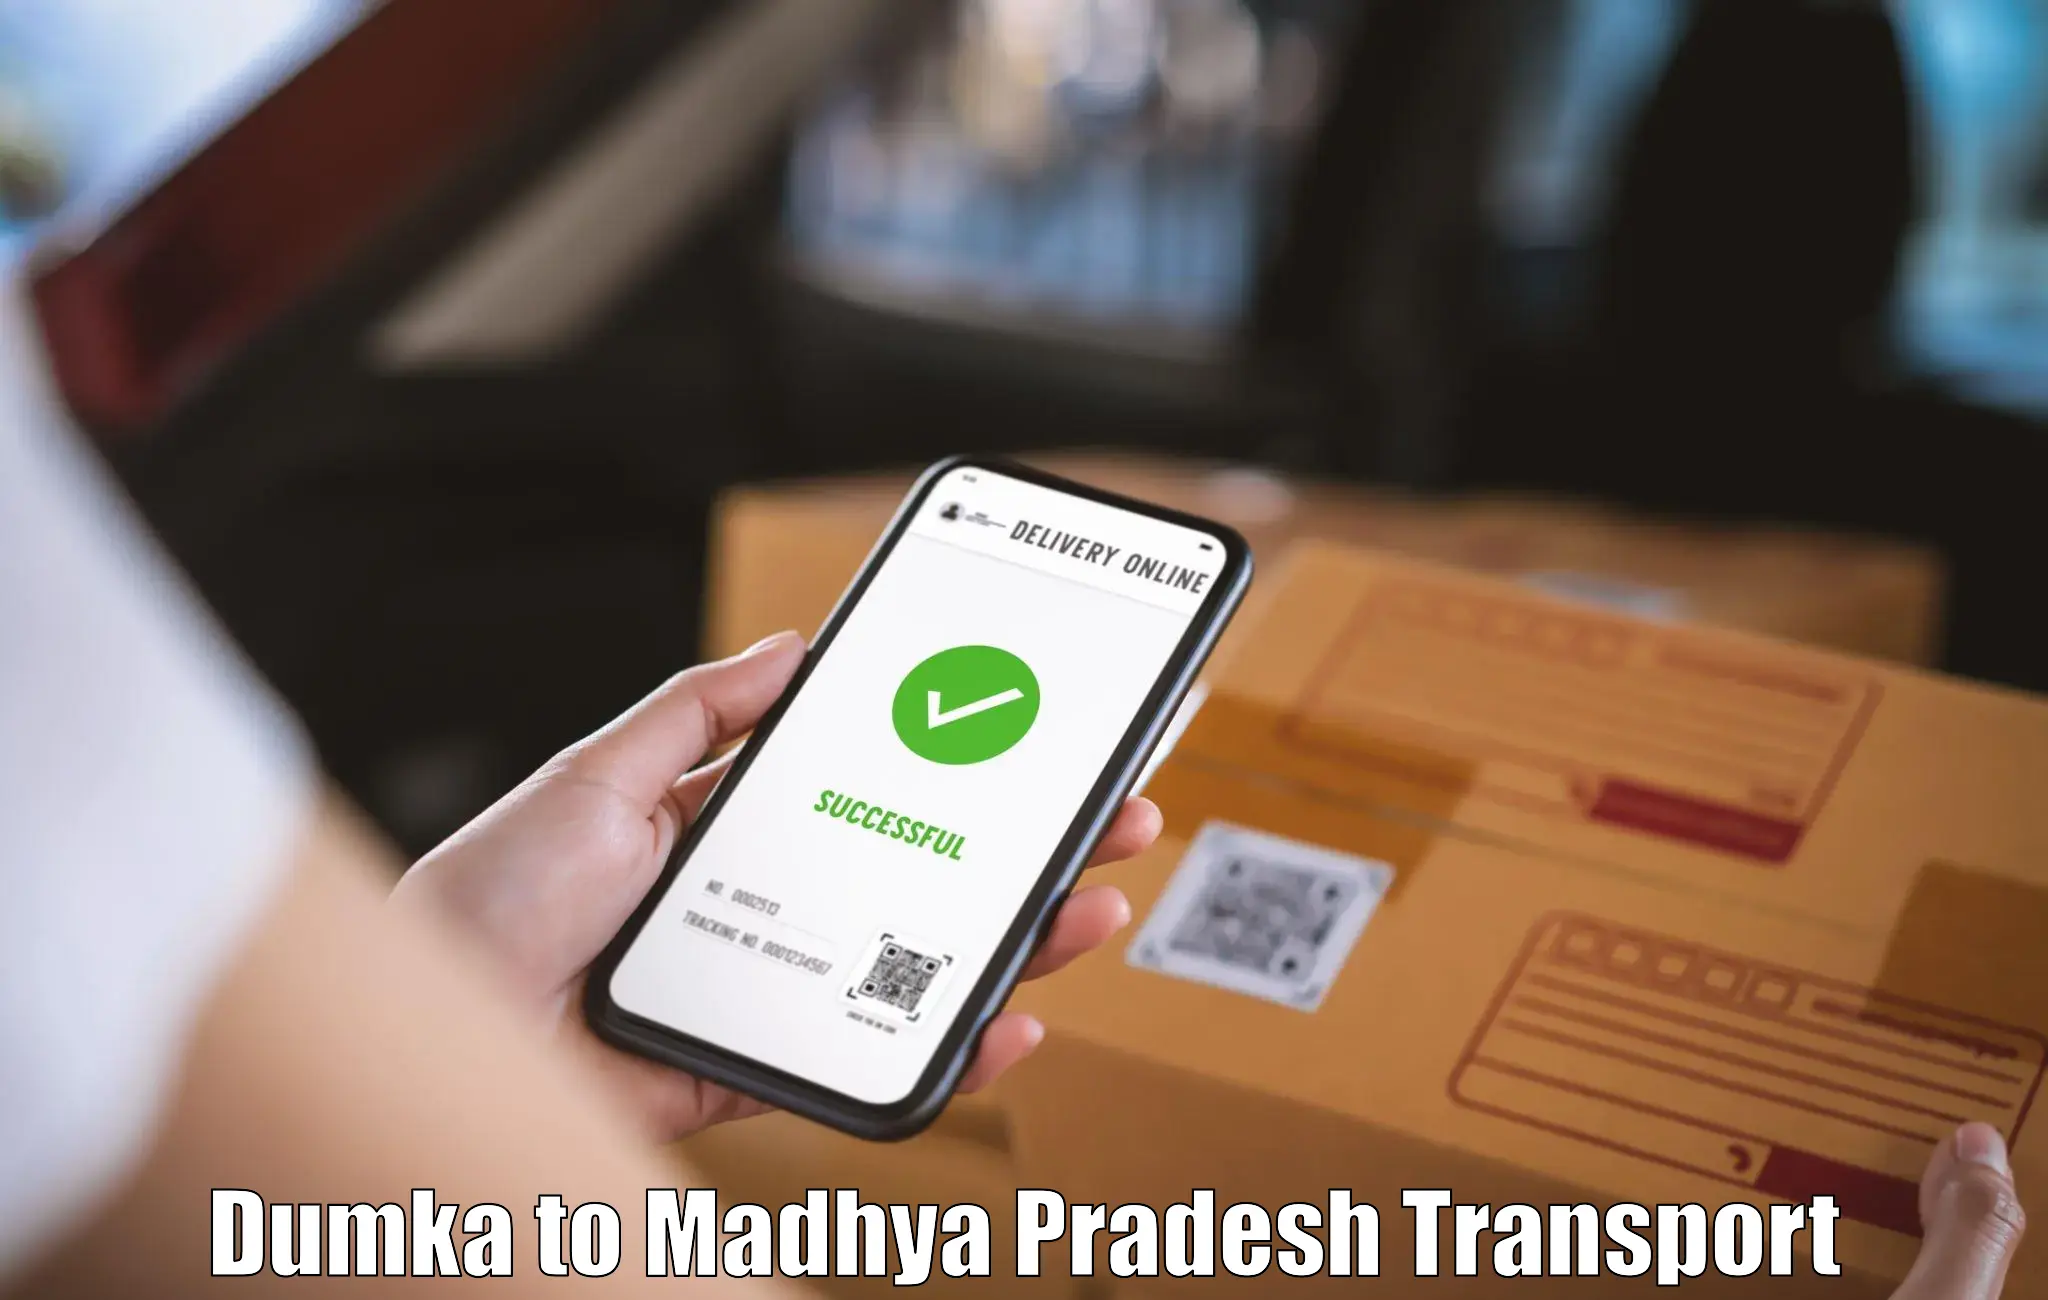 Nearby transport service Dumka to Madhya Pradesh